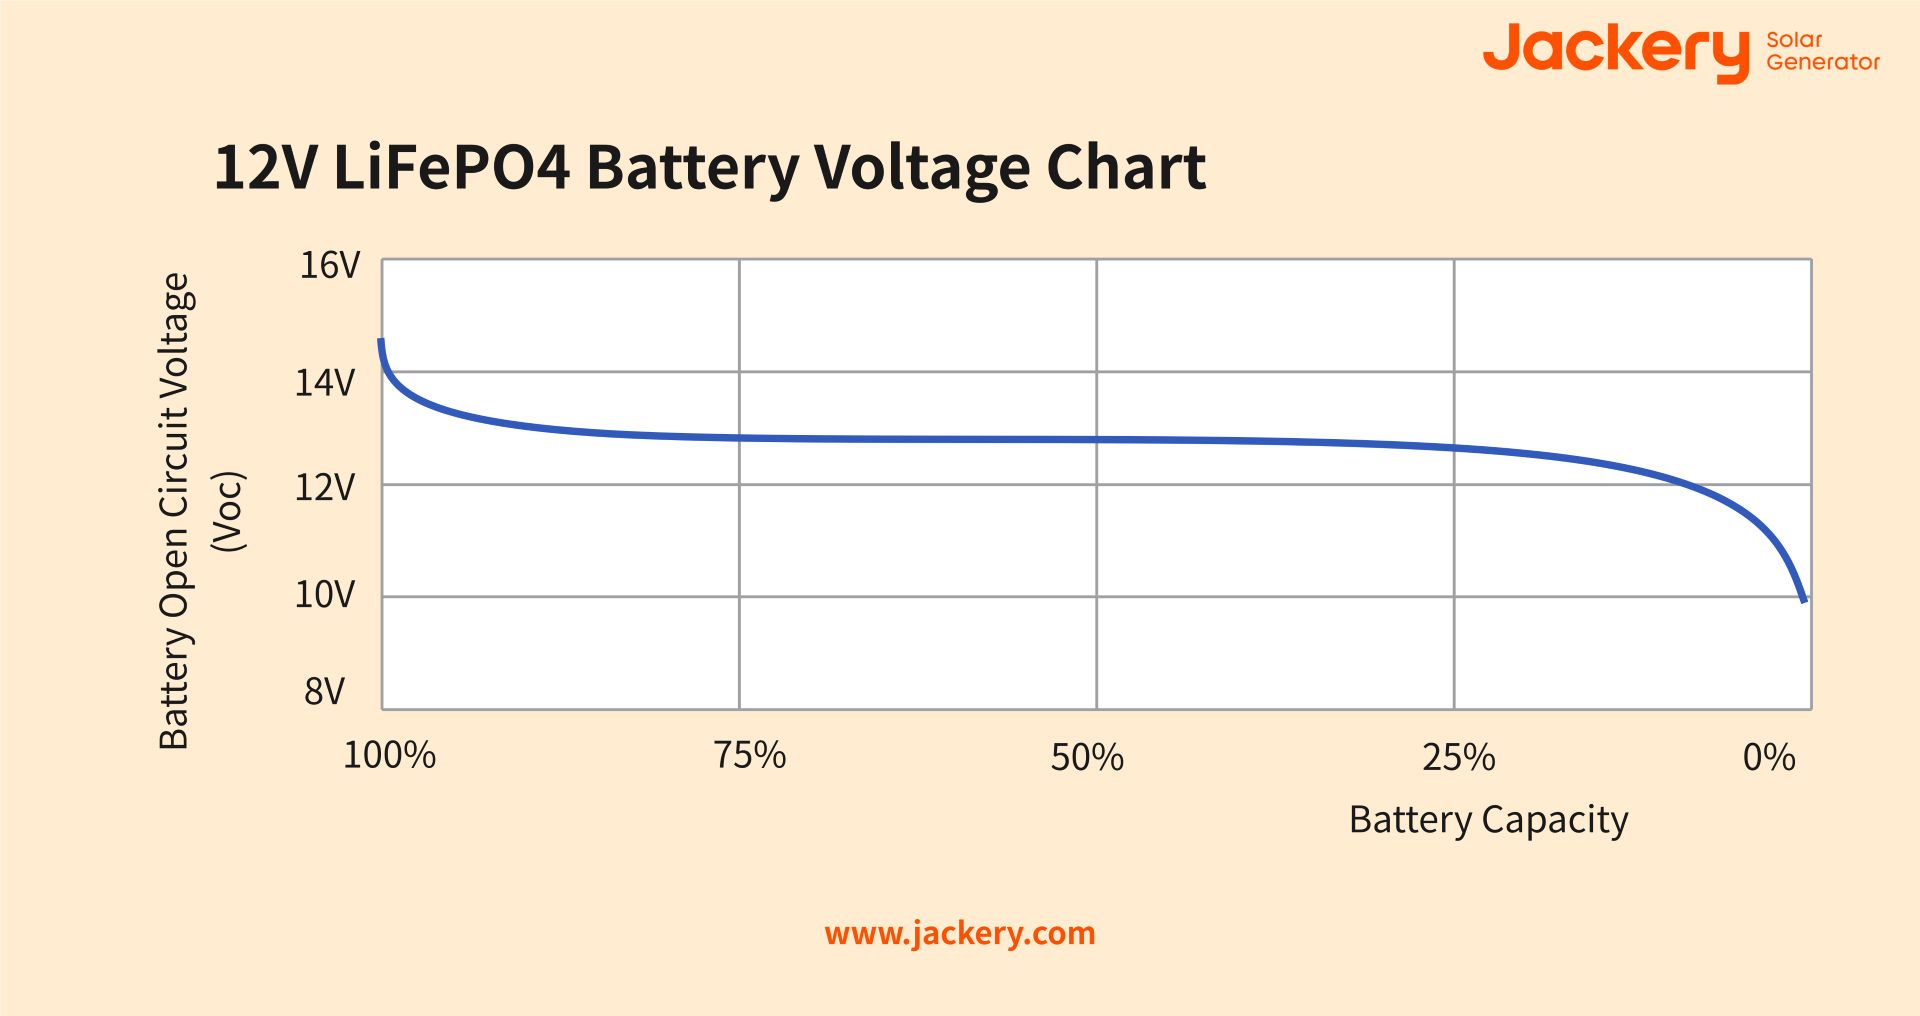 12v LiFePO4 battery voltage chart